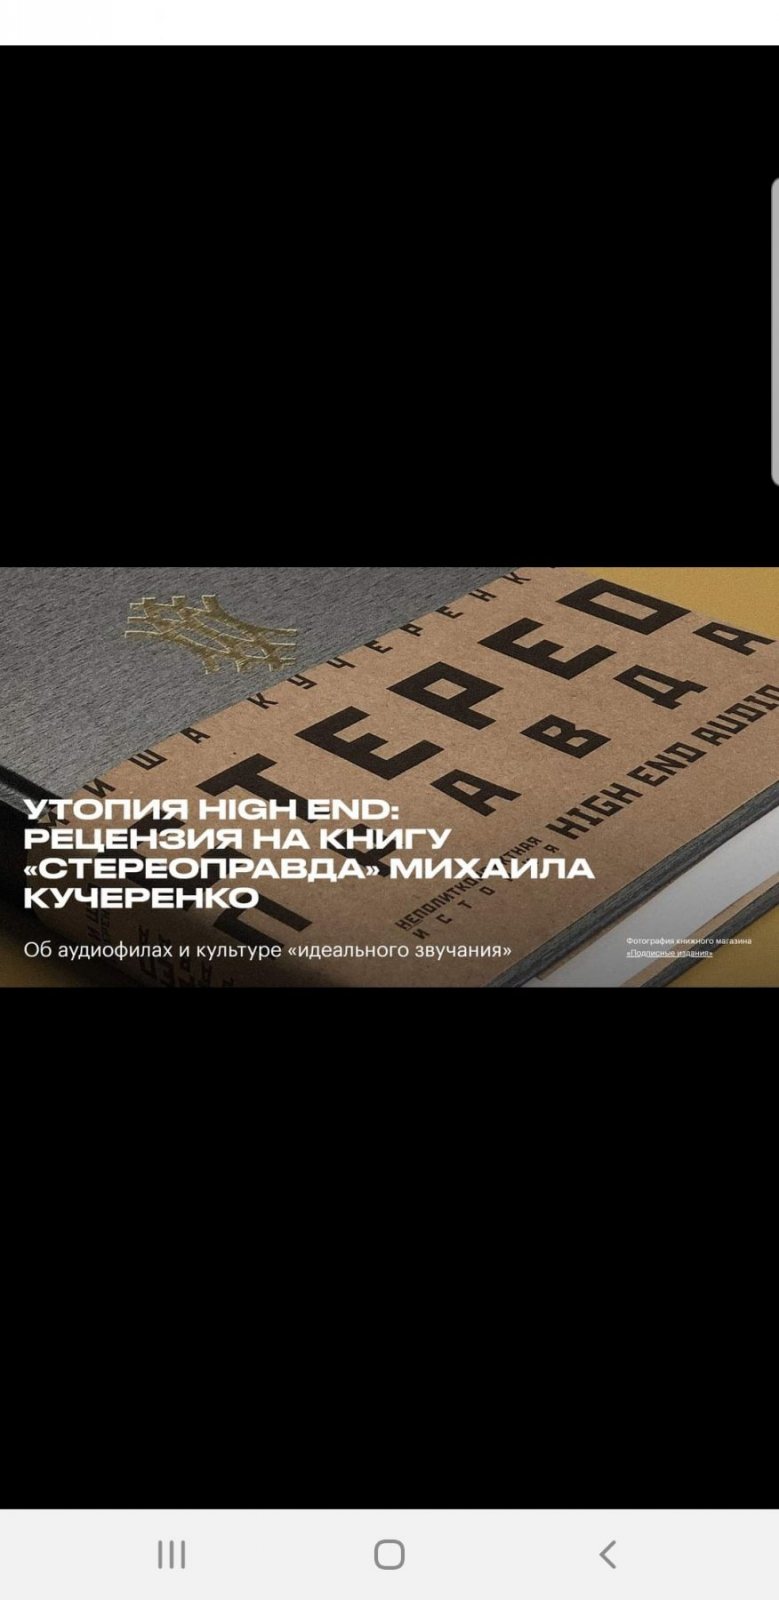 BOOK-REVIEWS-RUSSIAN-LUKOYANOV-I-M-I.RU-SCREENSHOT-05Aug20.jpg